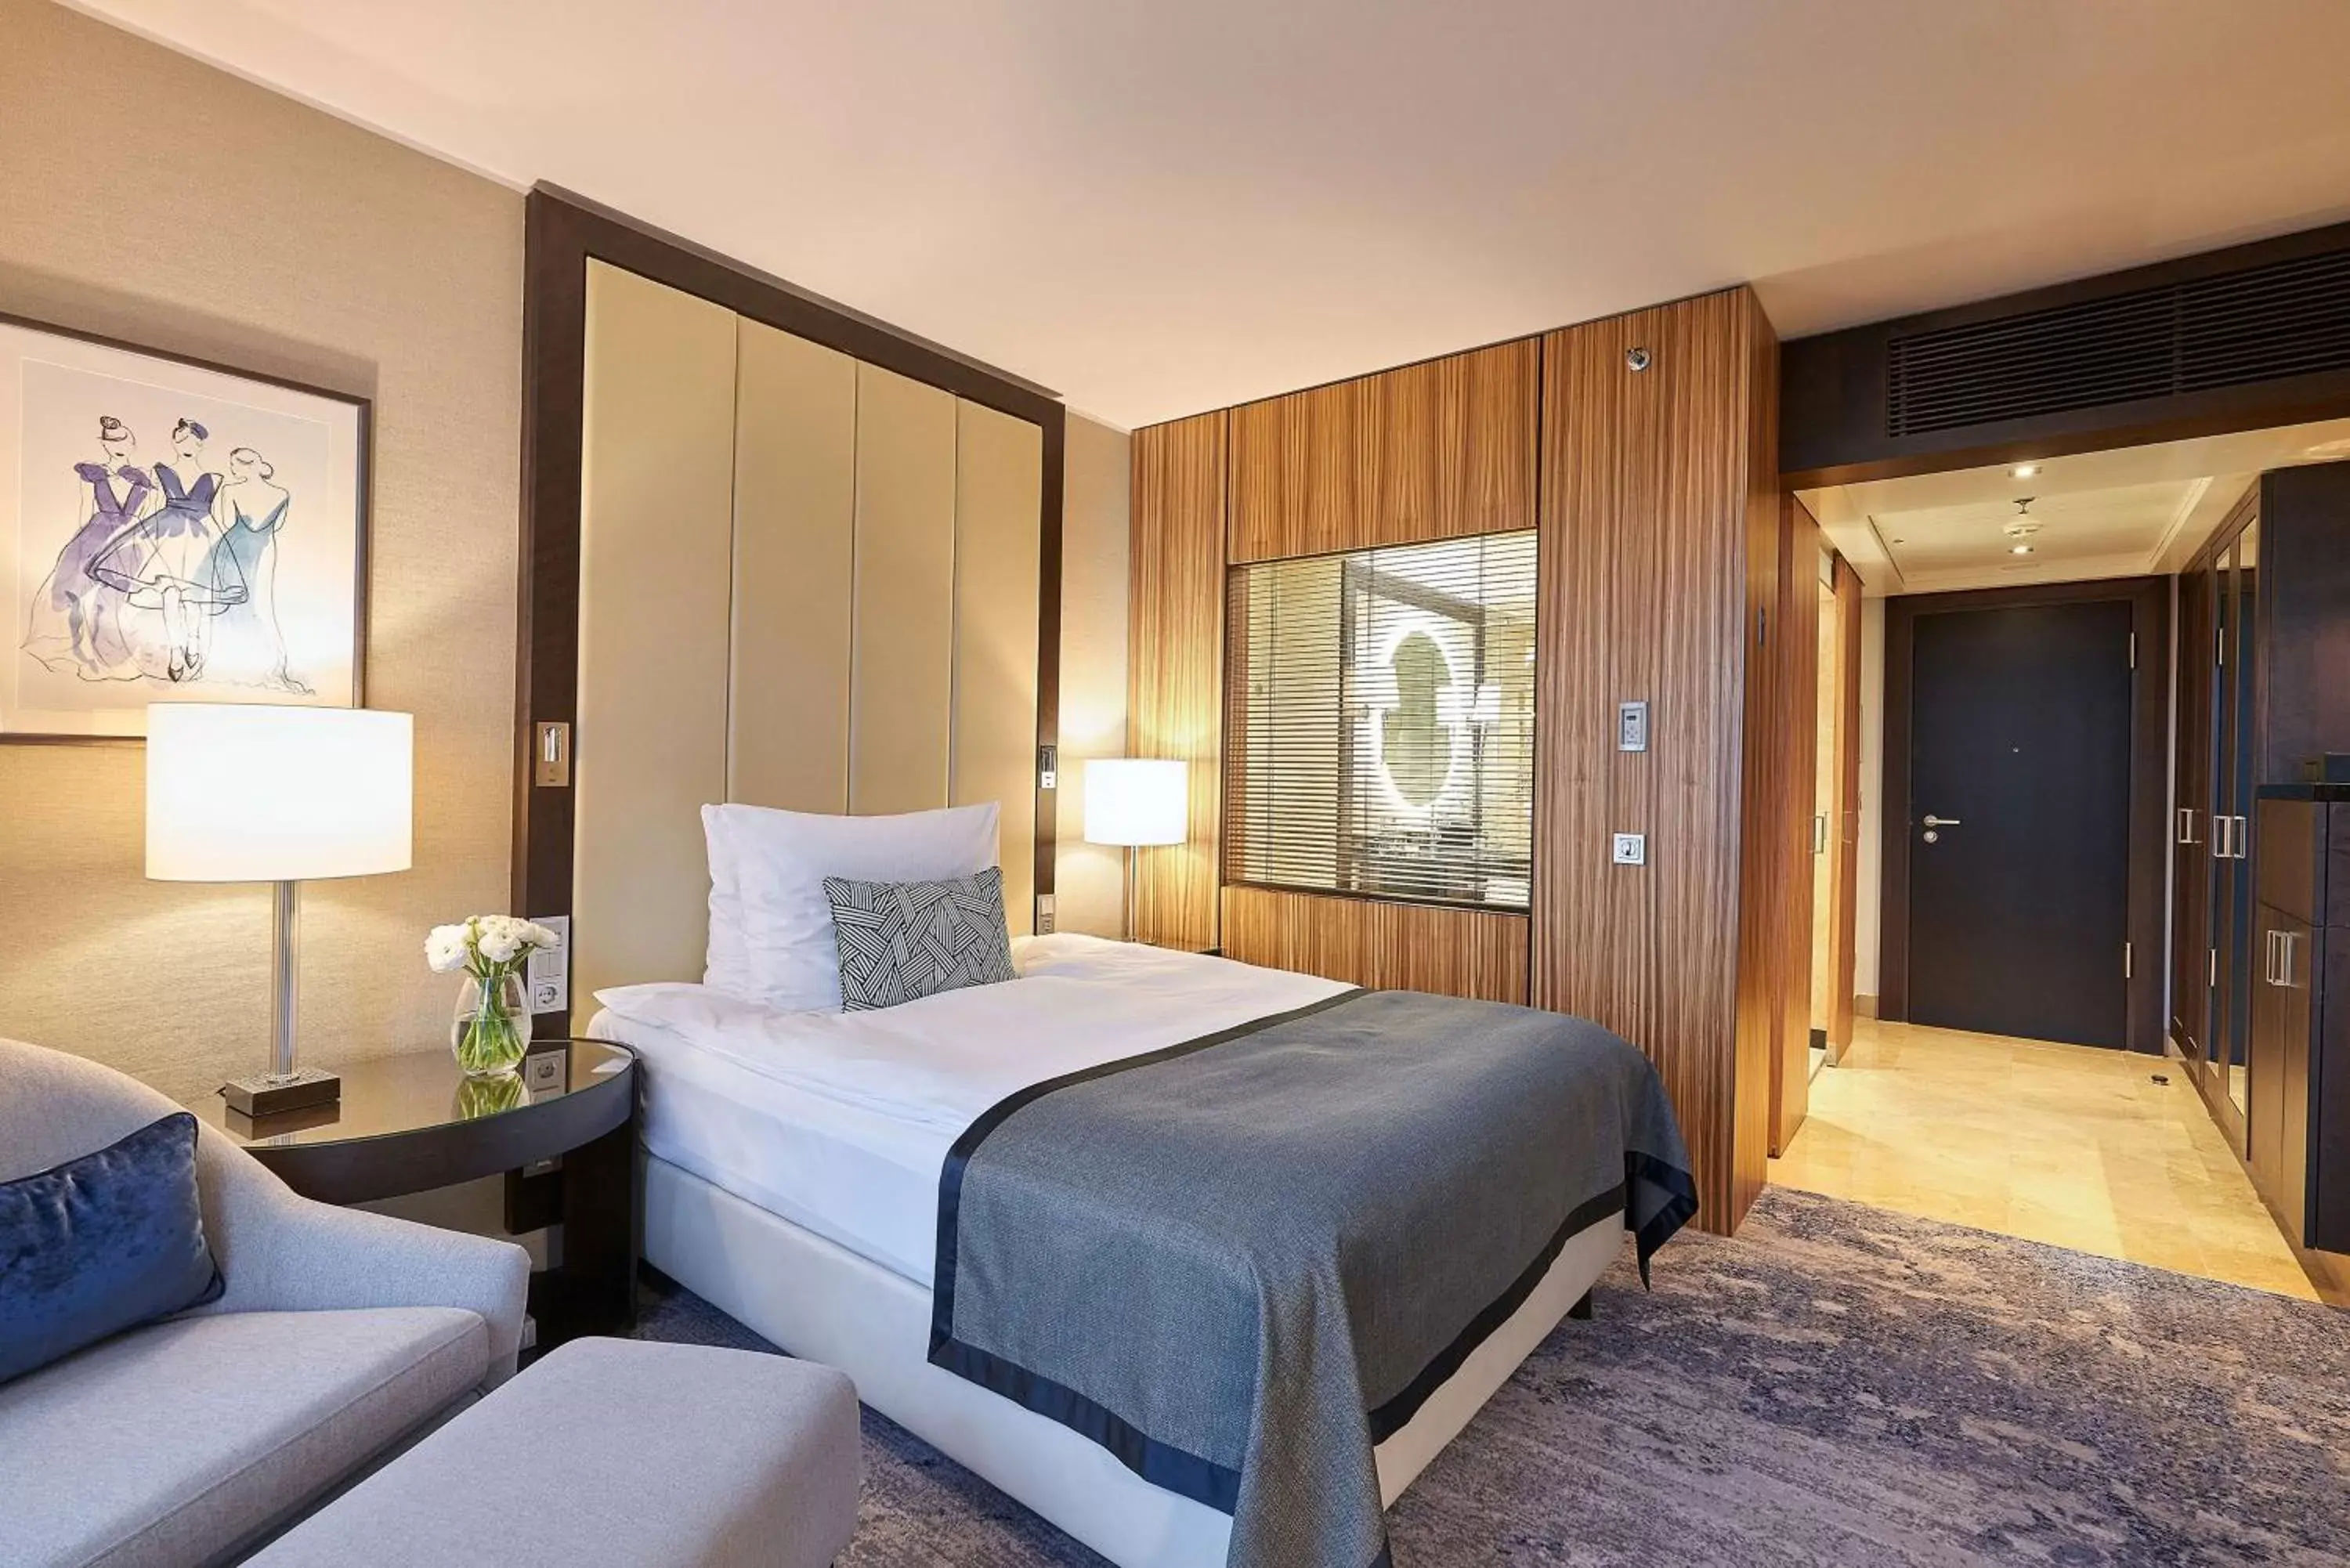 Standard Queen Room - single occupancy in Hotel Kö59 Düsseldorf - Member of Hommage Luxury Hotels Collection